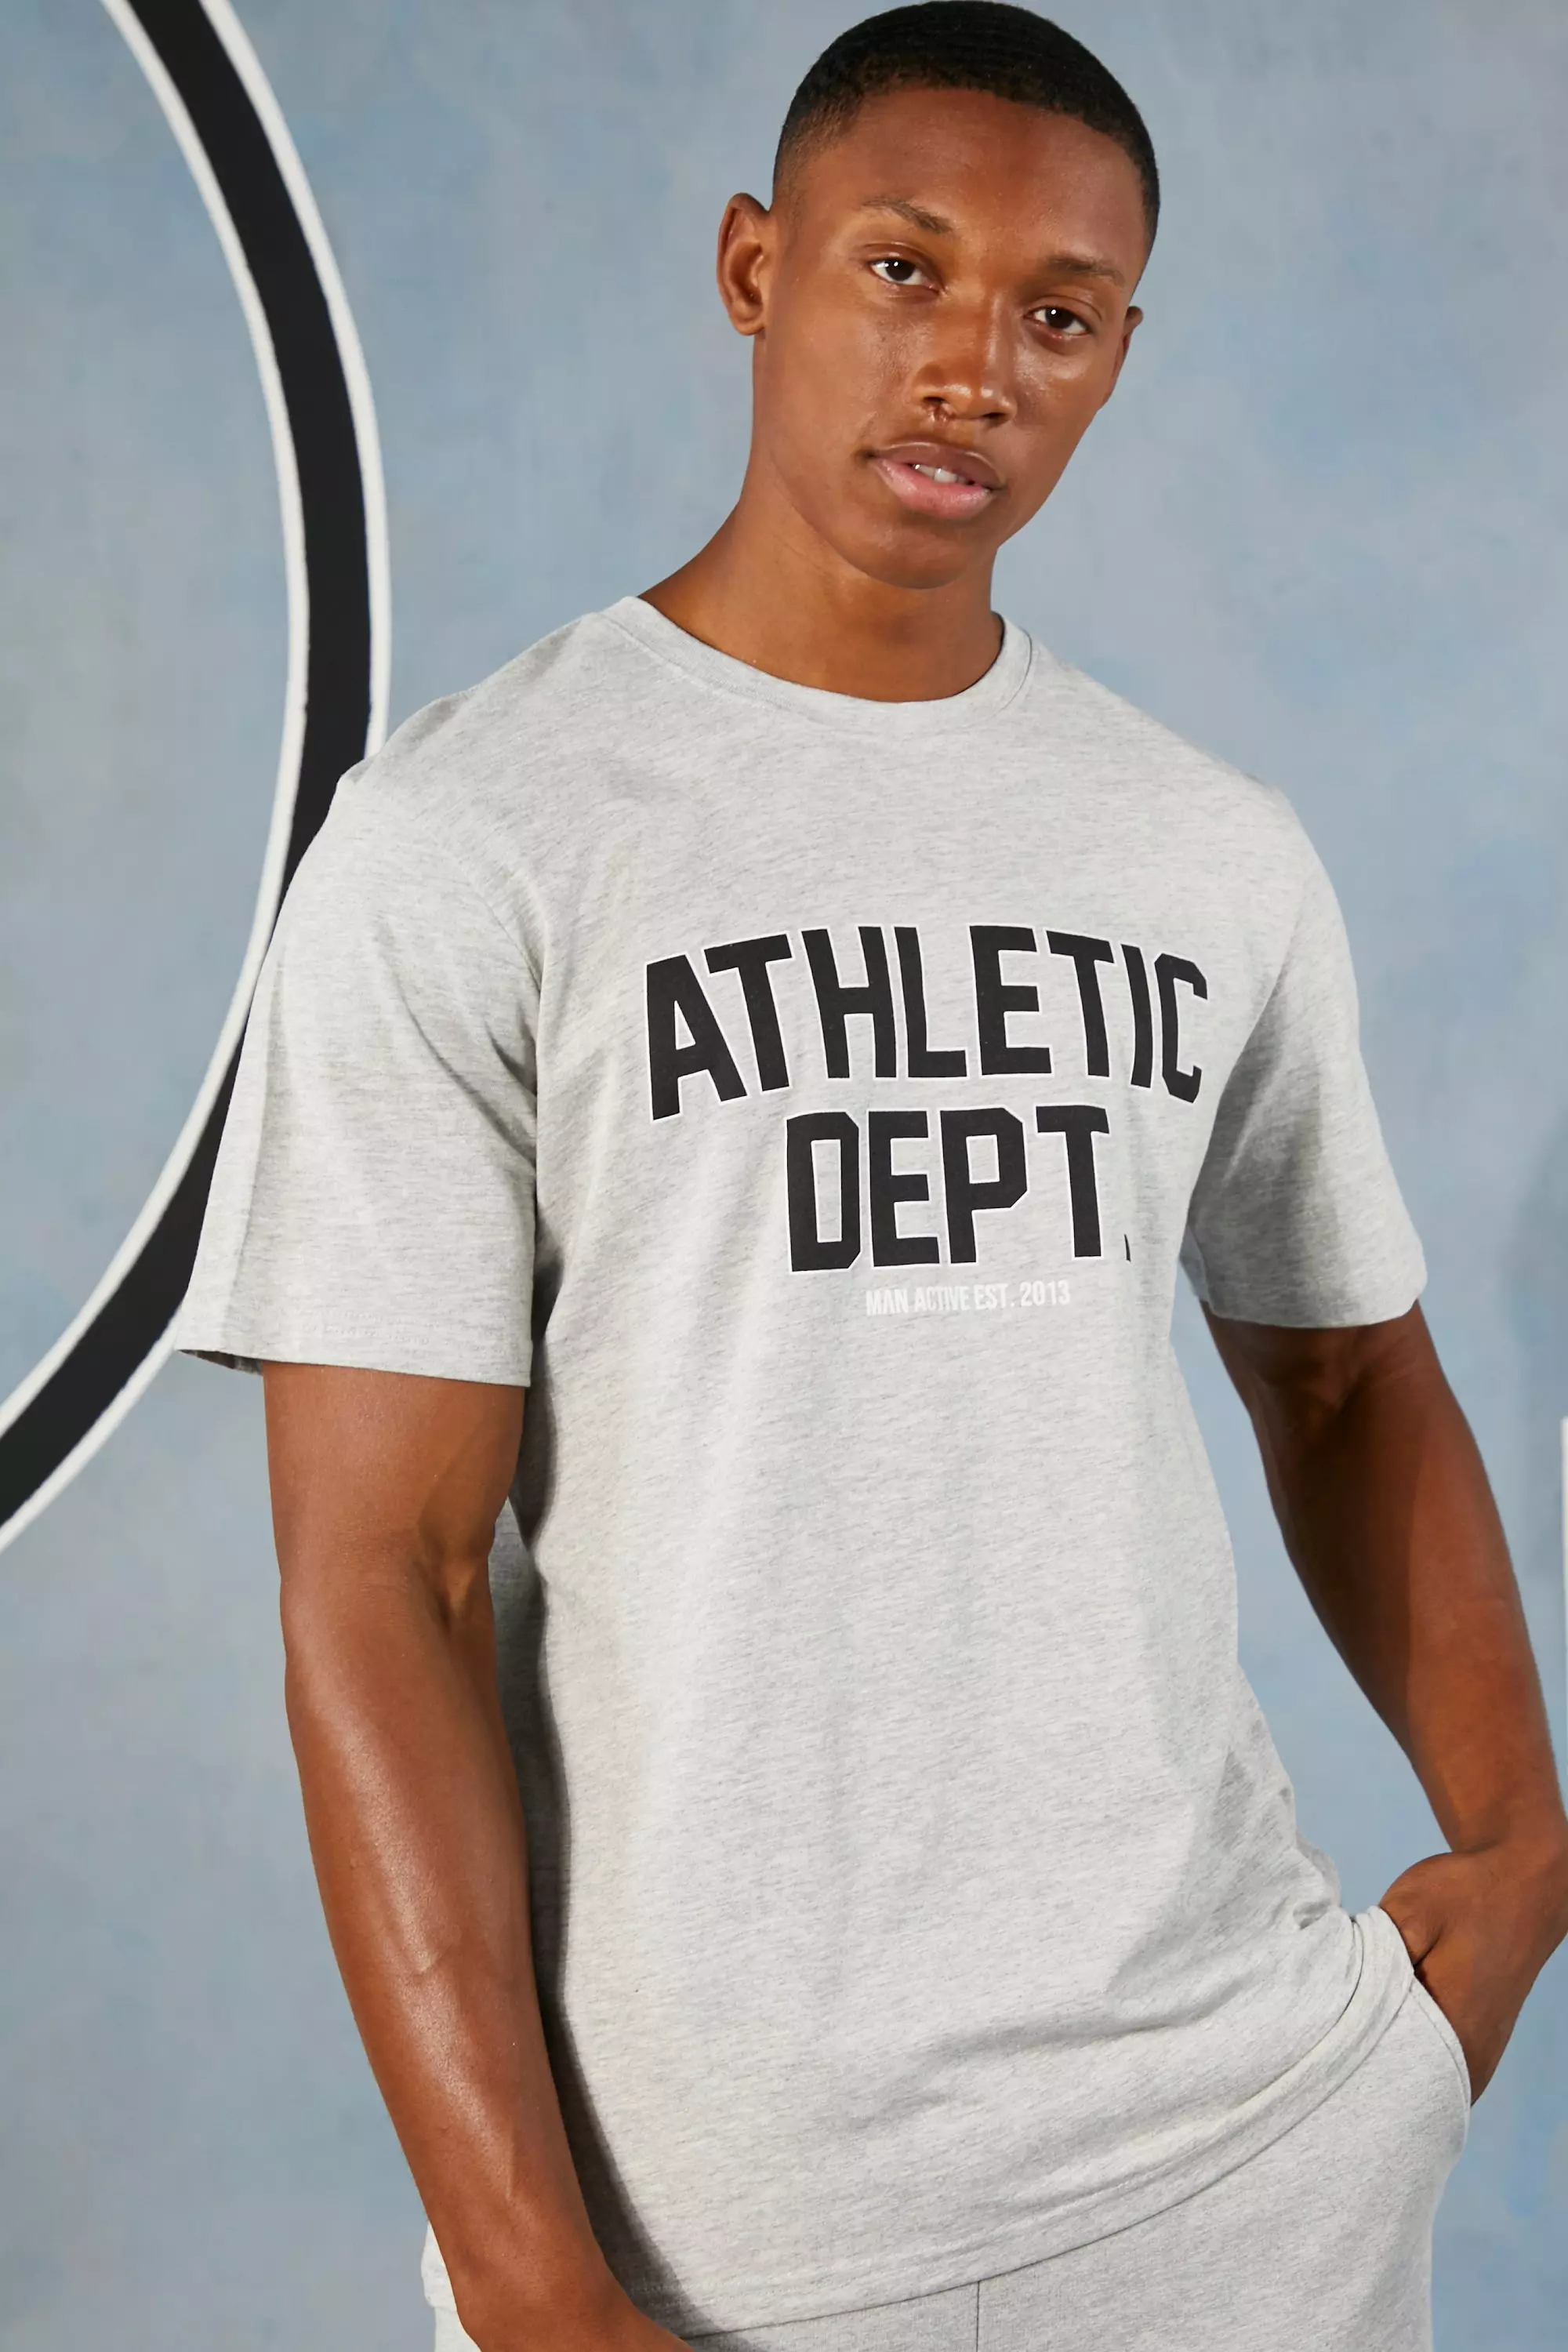 Man Active Athletic Department T-shirt